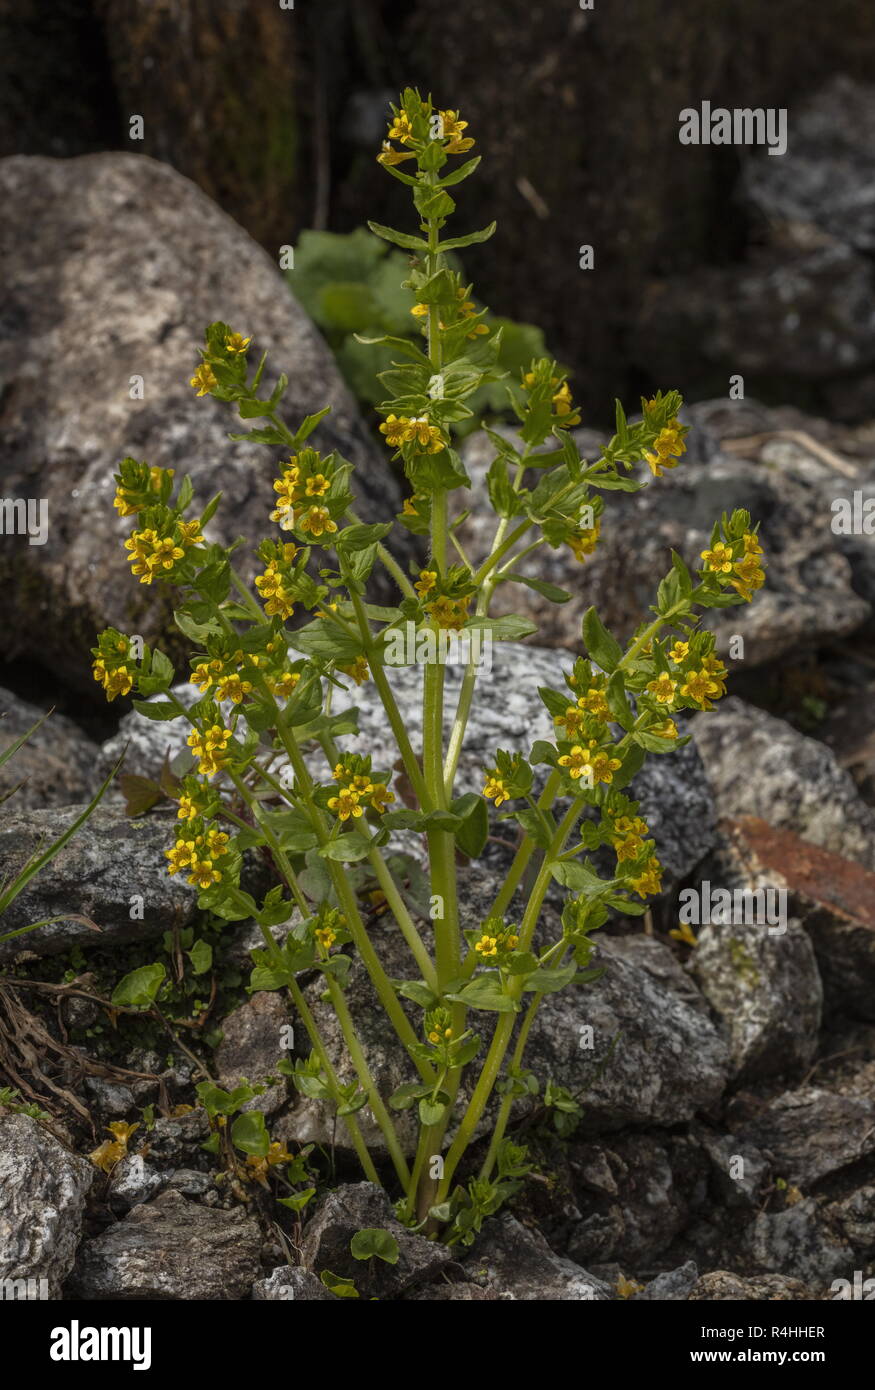 Tozzia, Tozzia alpina, in flower; semi-parasite on Asteraceae, especially Adenostyles. Swiss Alps. Stock Photo